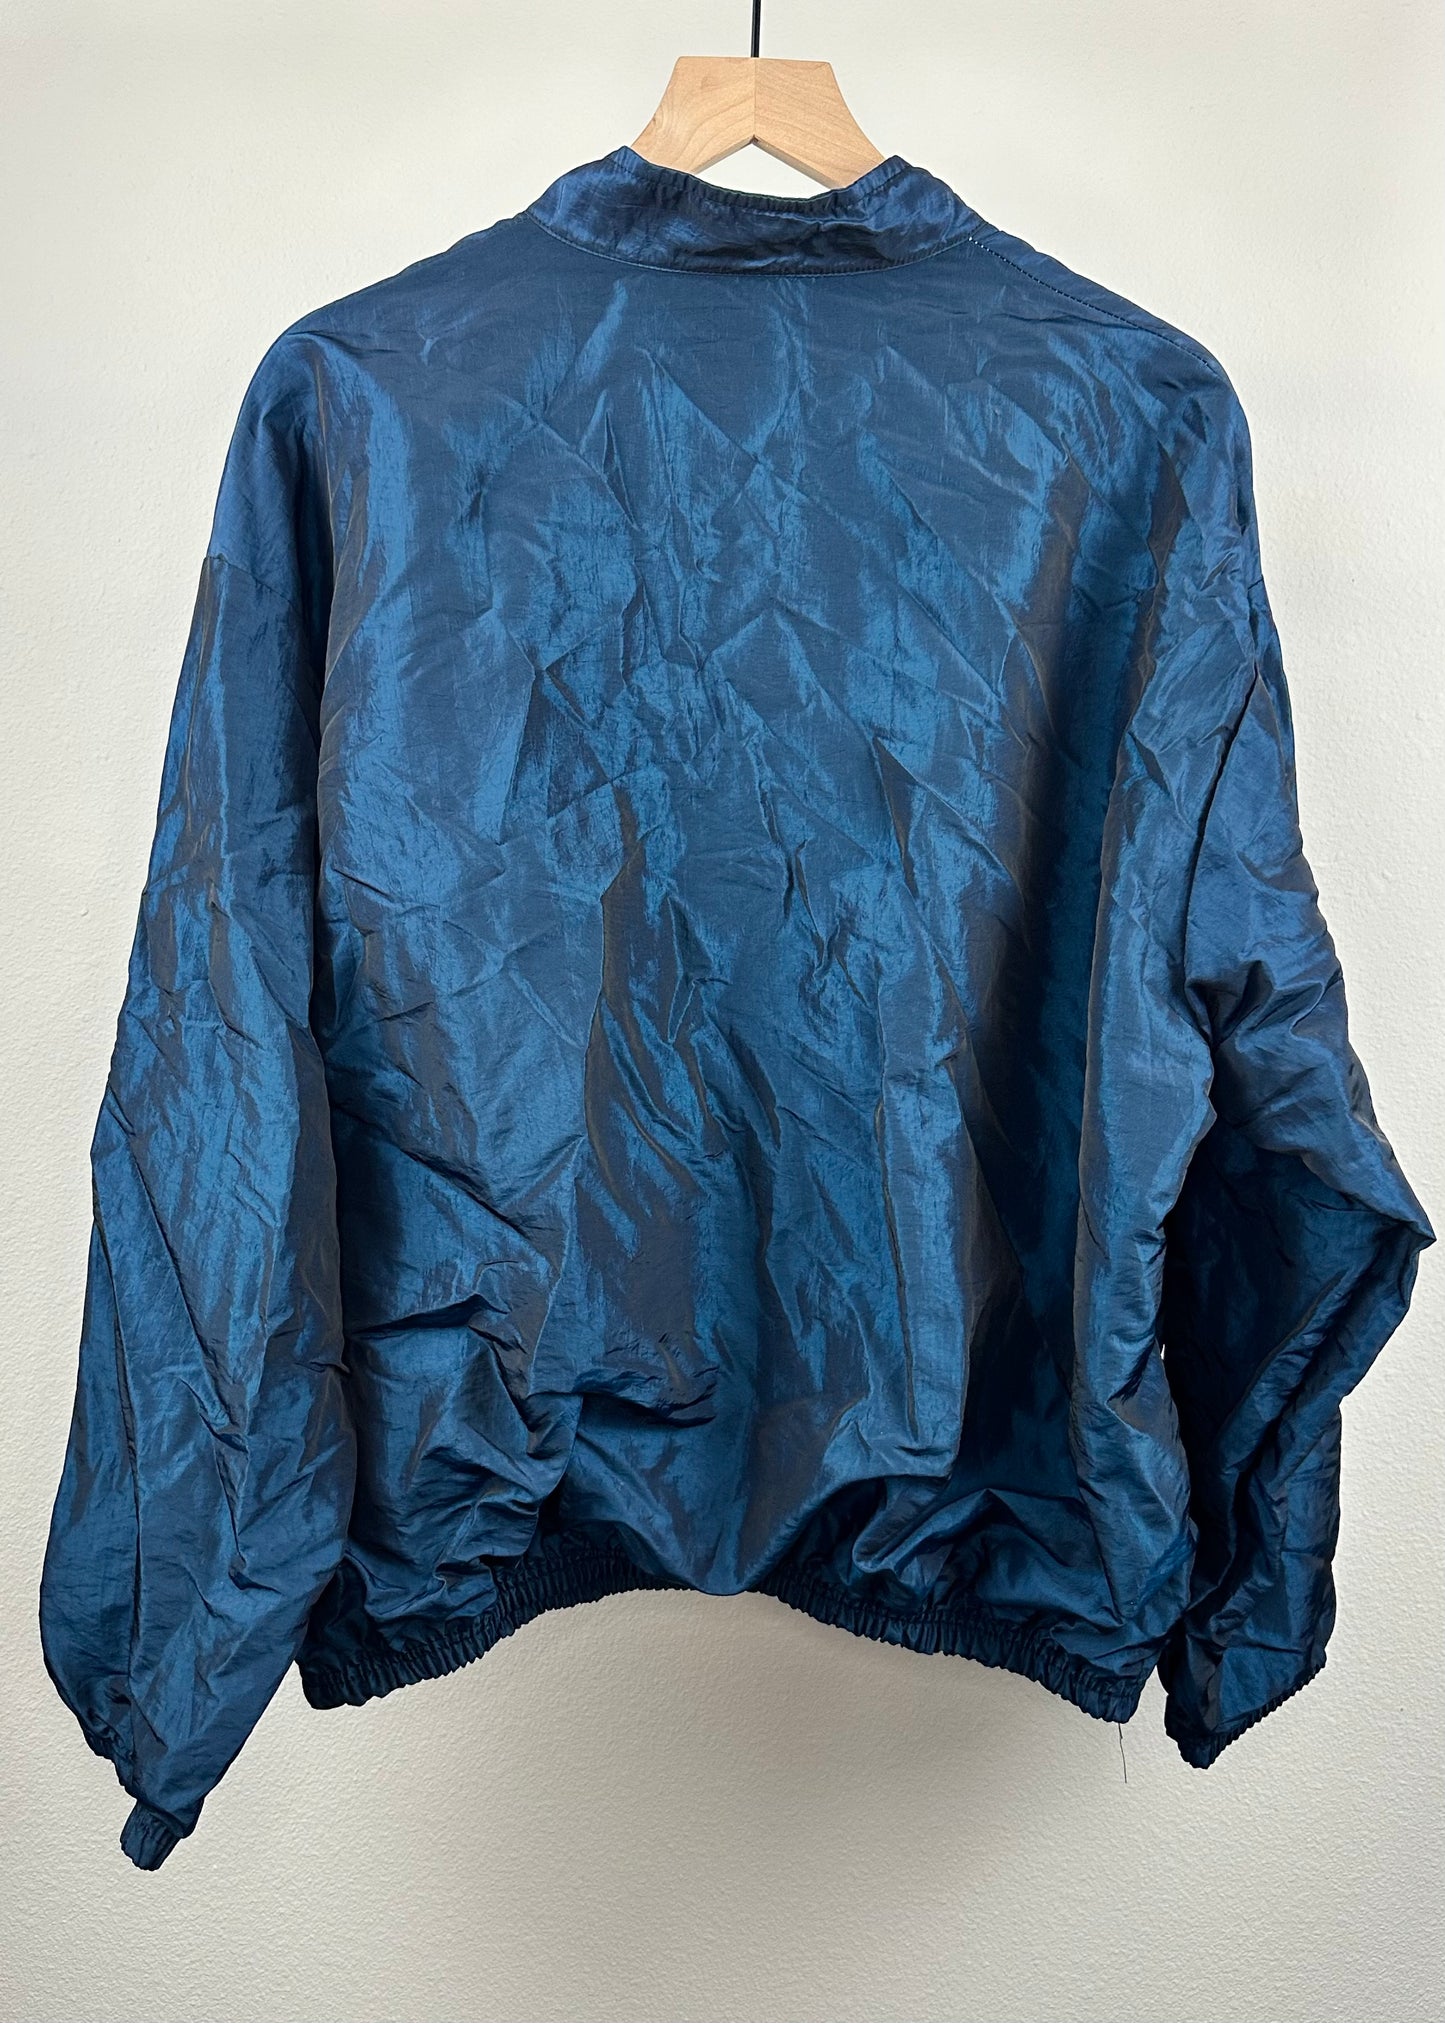 Blue Nylon Jacket By Surf Style